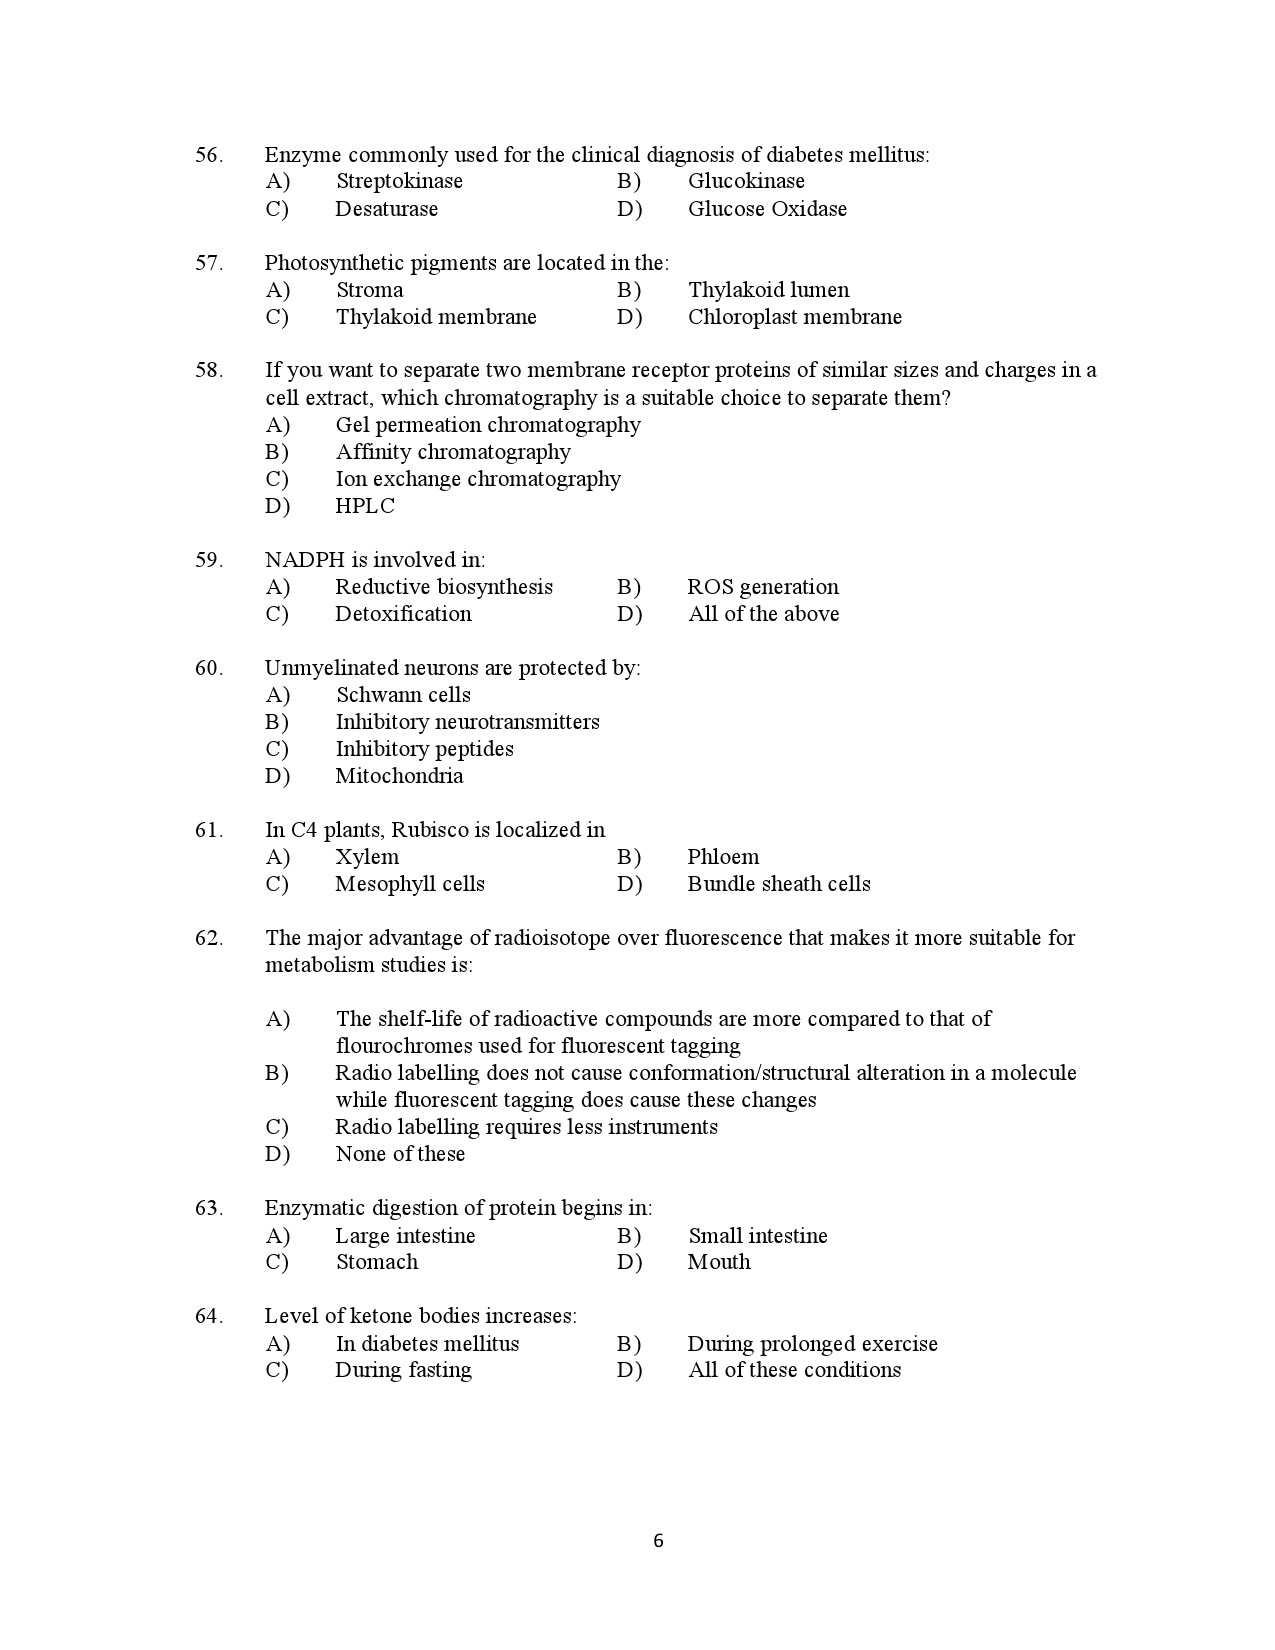 Kerala SET Biotechnology Exam Question Paper July 2021 6